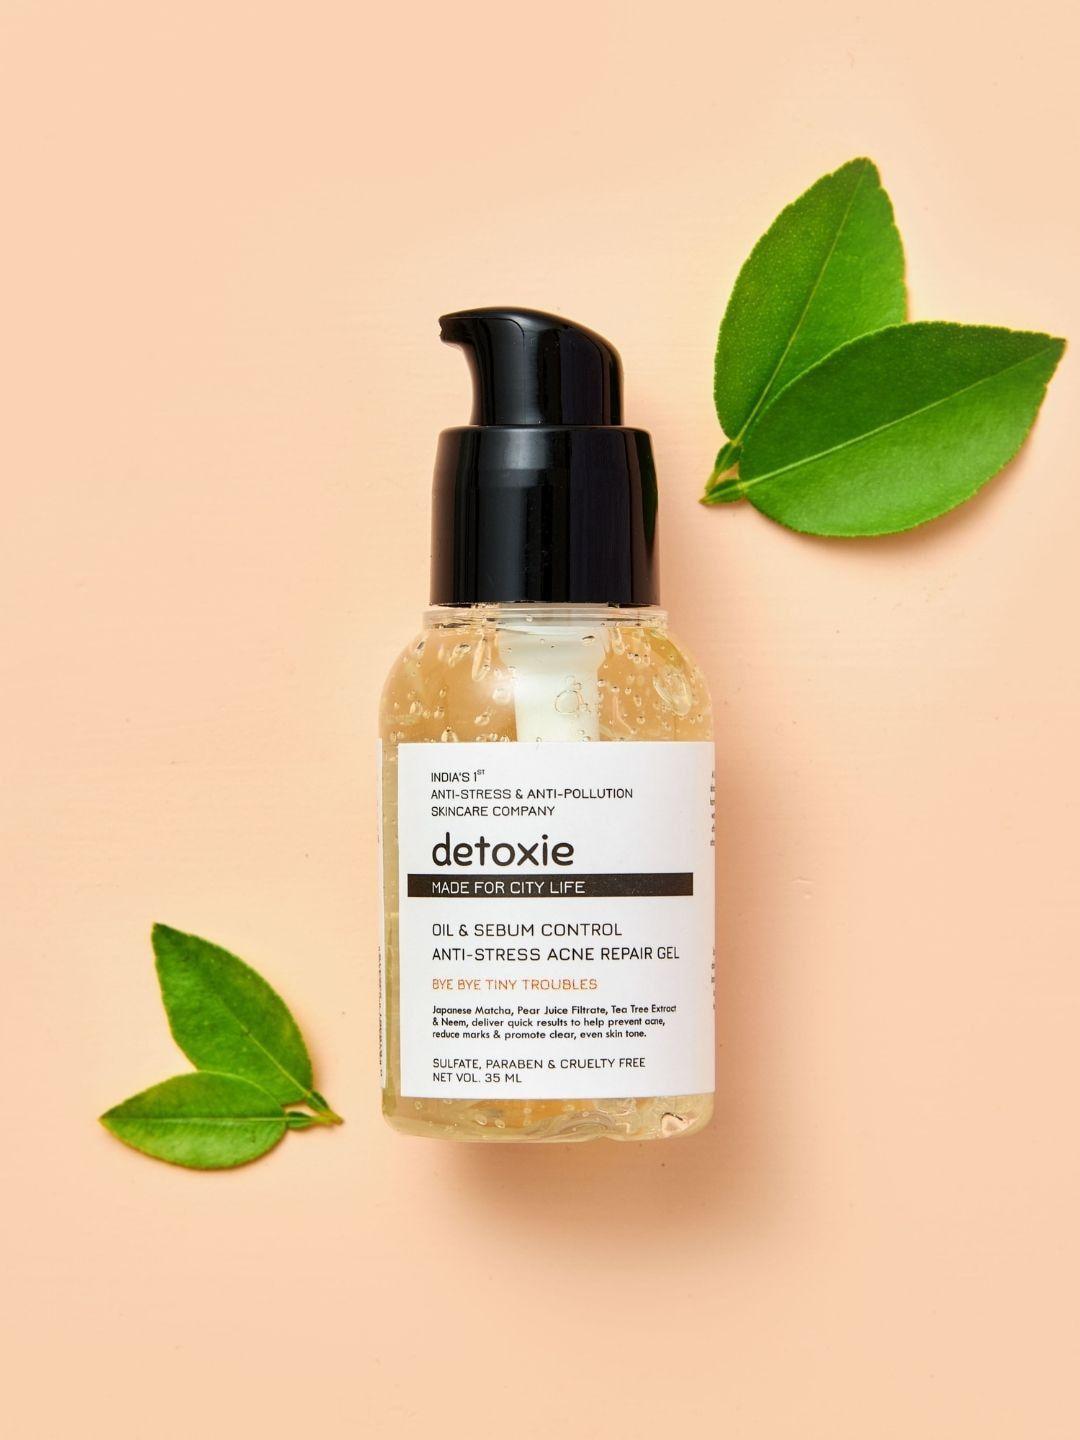 detoxie oil & sebum control anti-stress acne repair gel - 35 ml